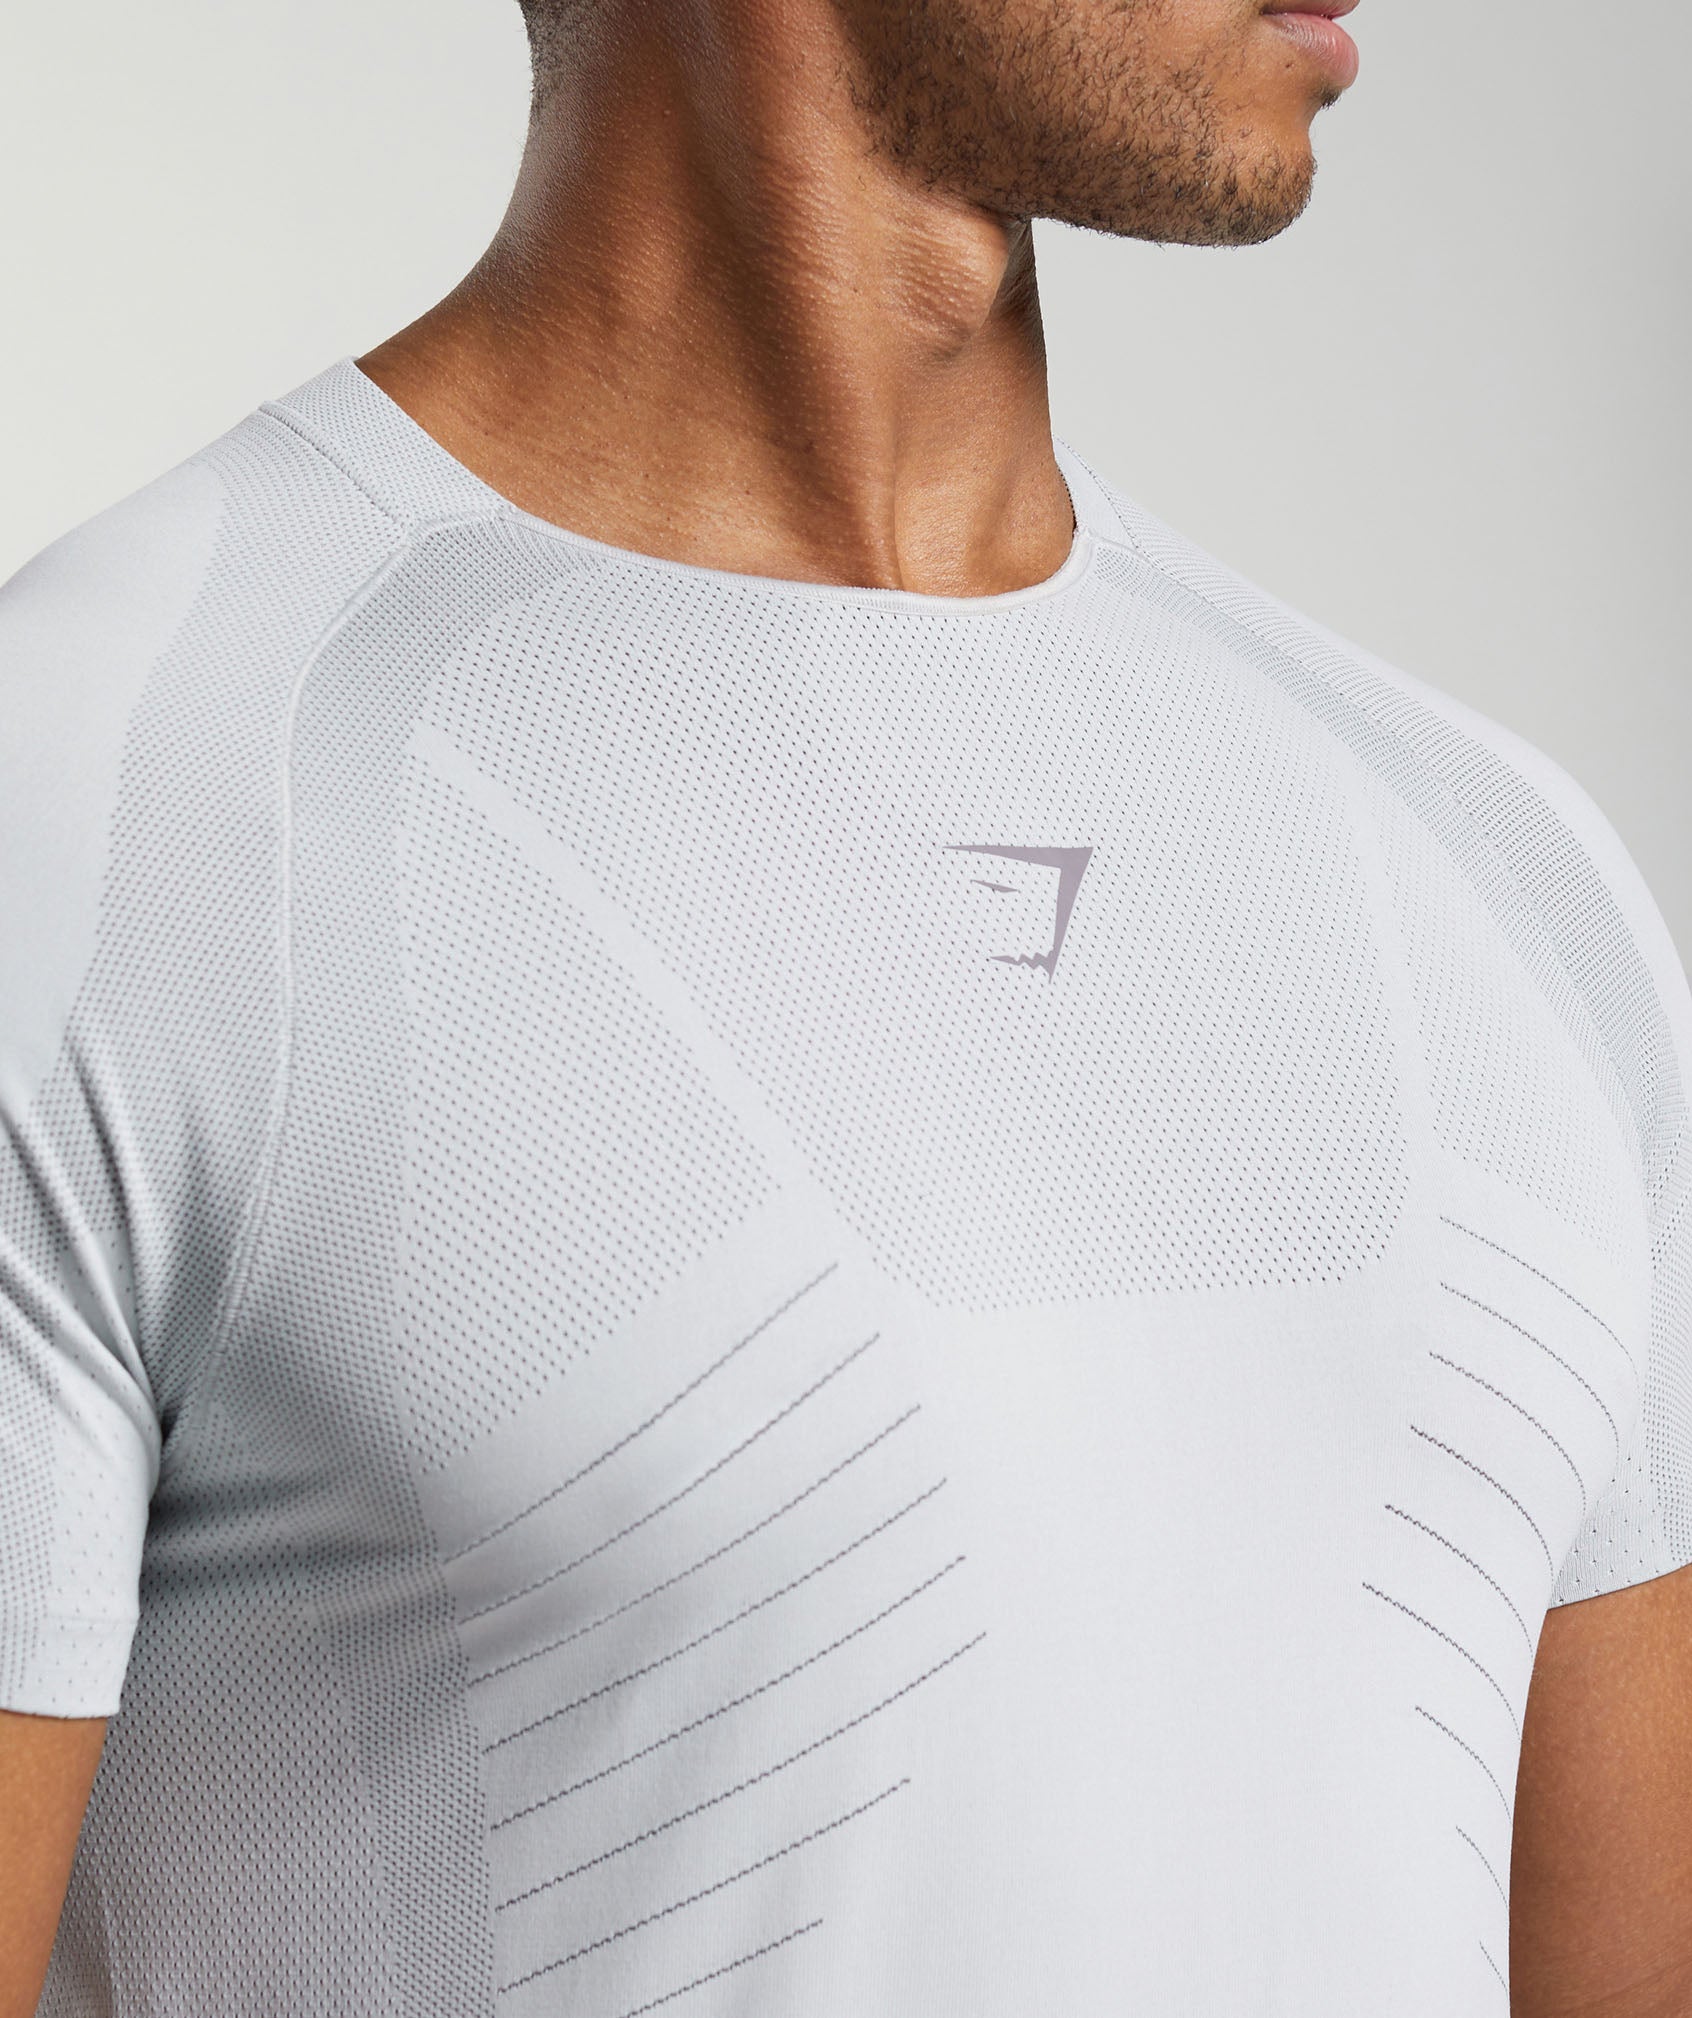 Apex Seamless T-Shirt in Light Grey/Medium Grey - view 5